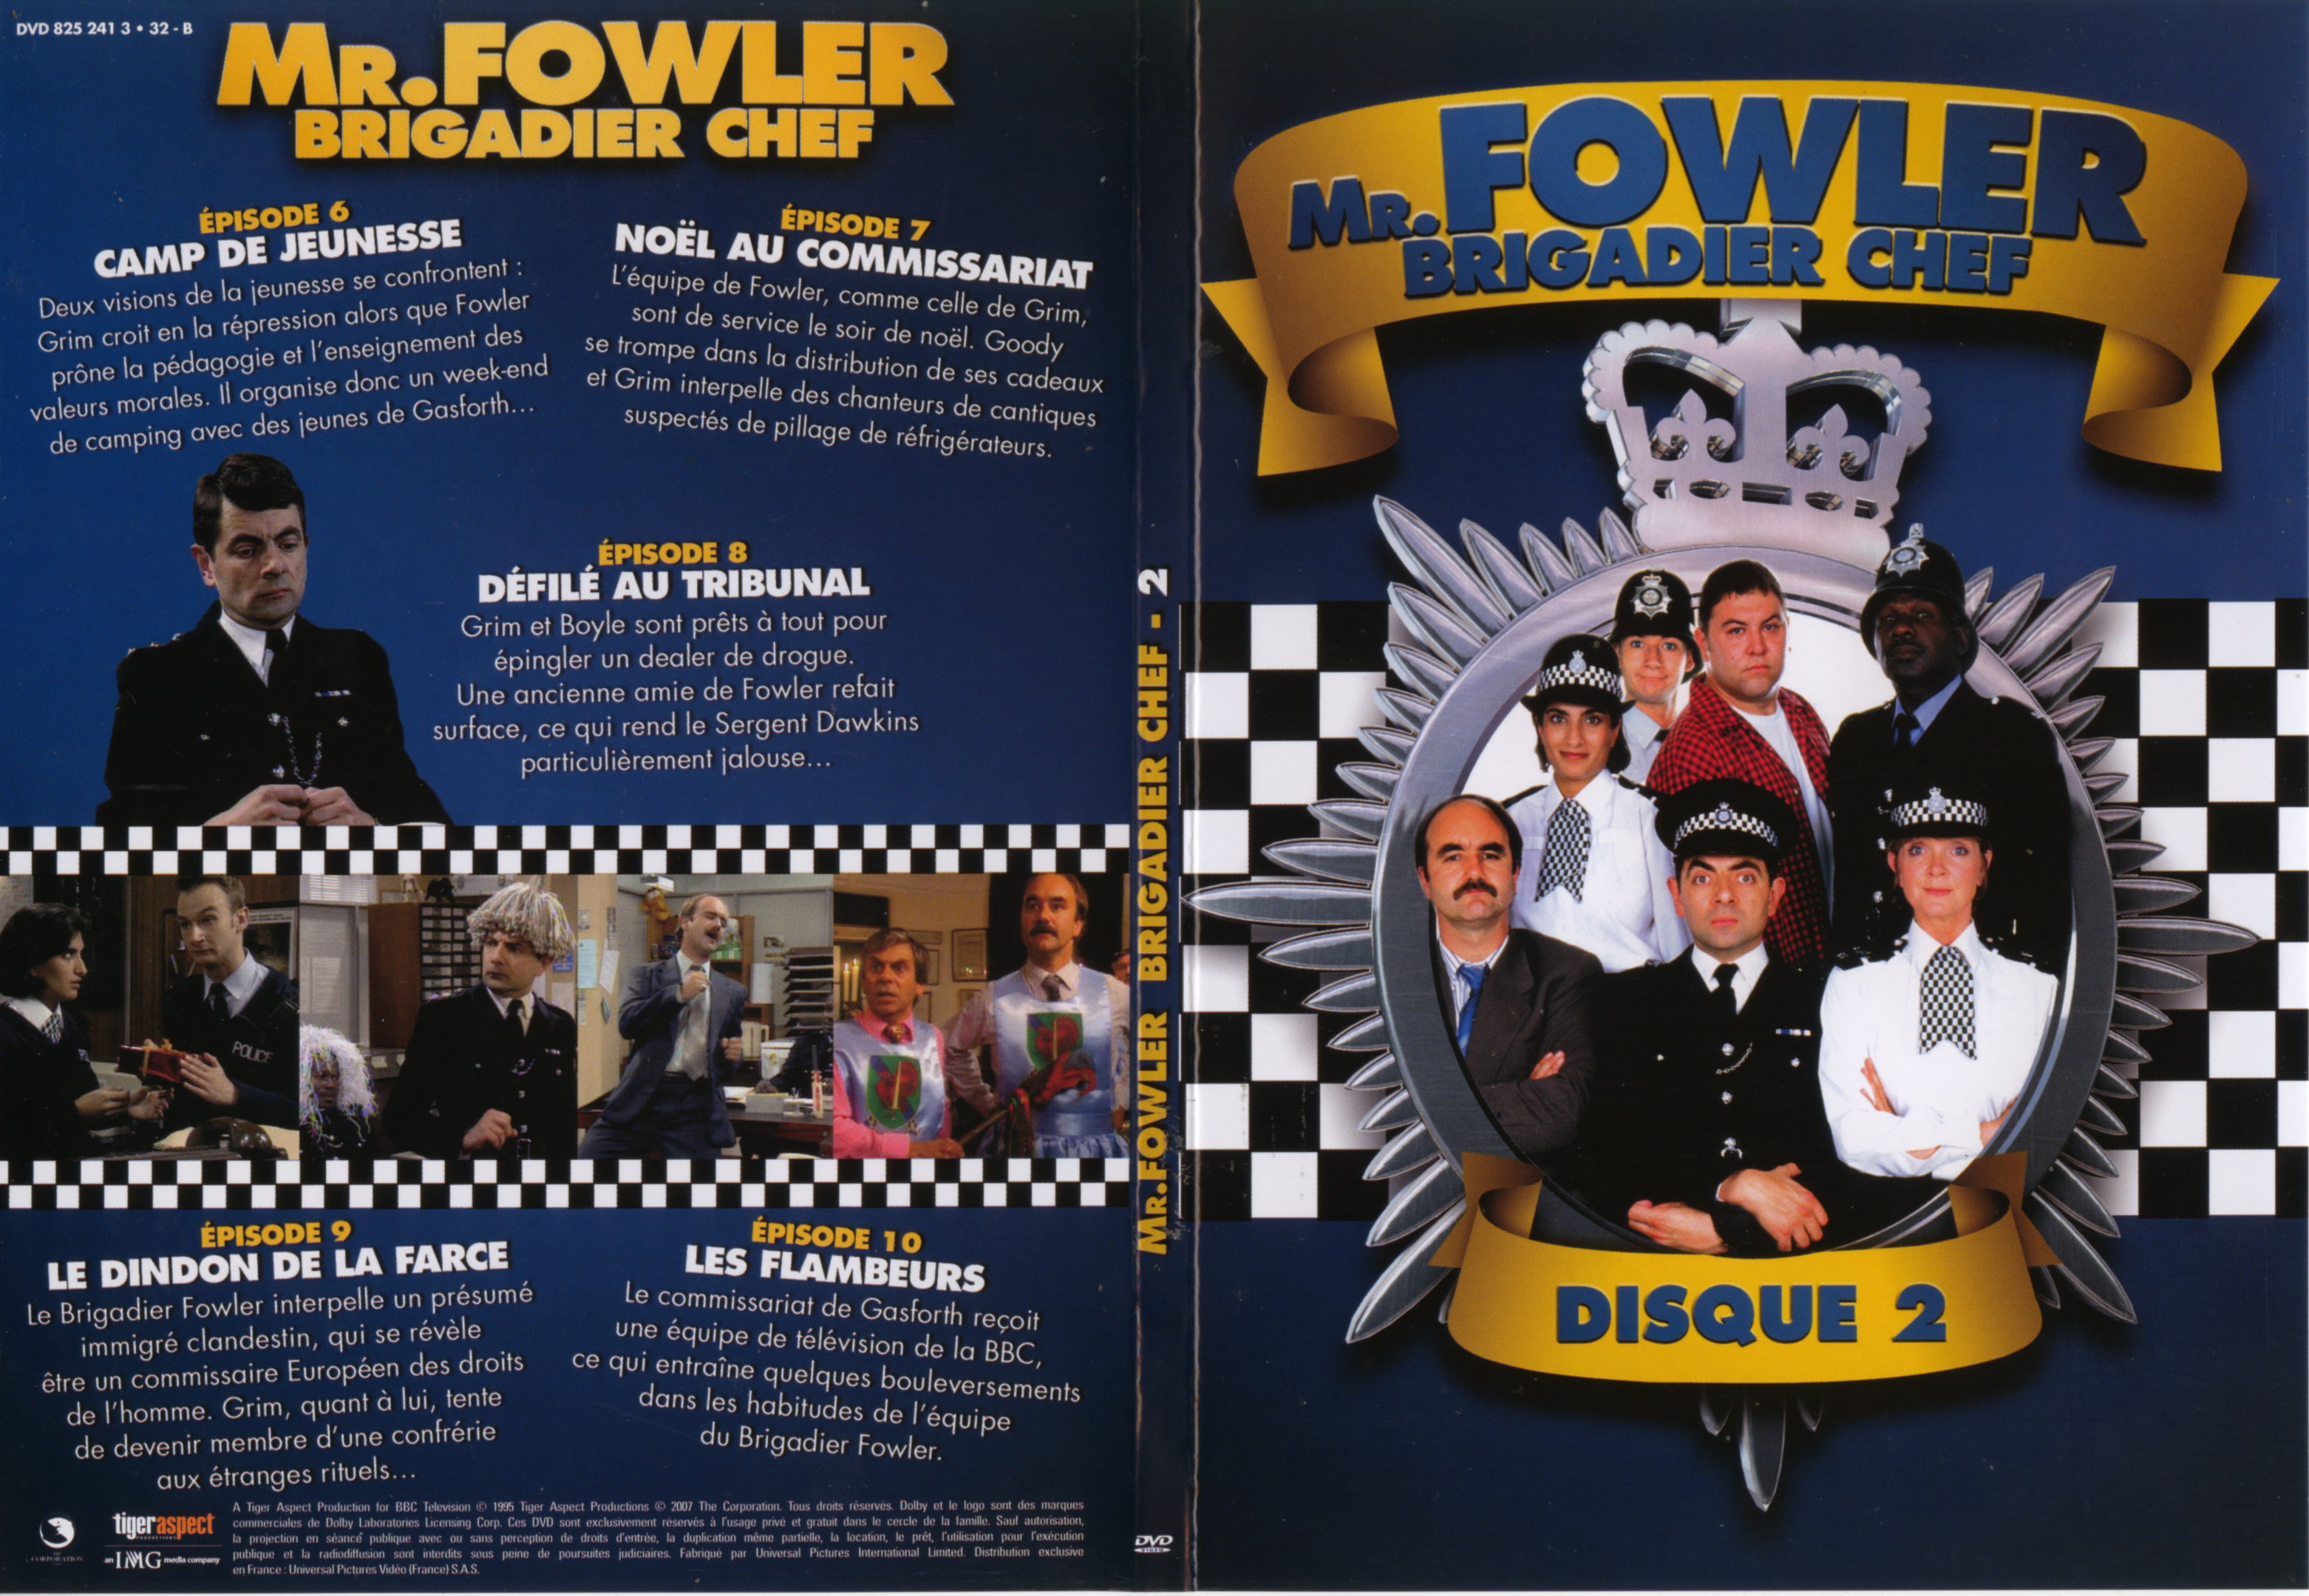 Jaquette DVD Mr Fowler brigadier chef DVD 2